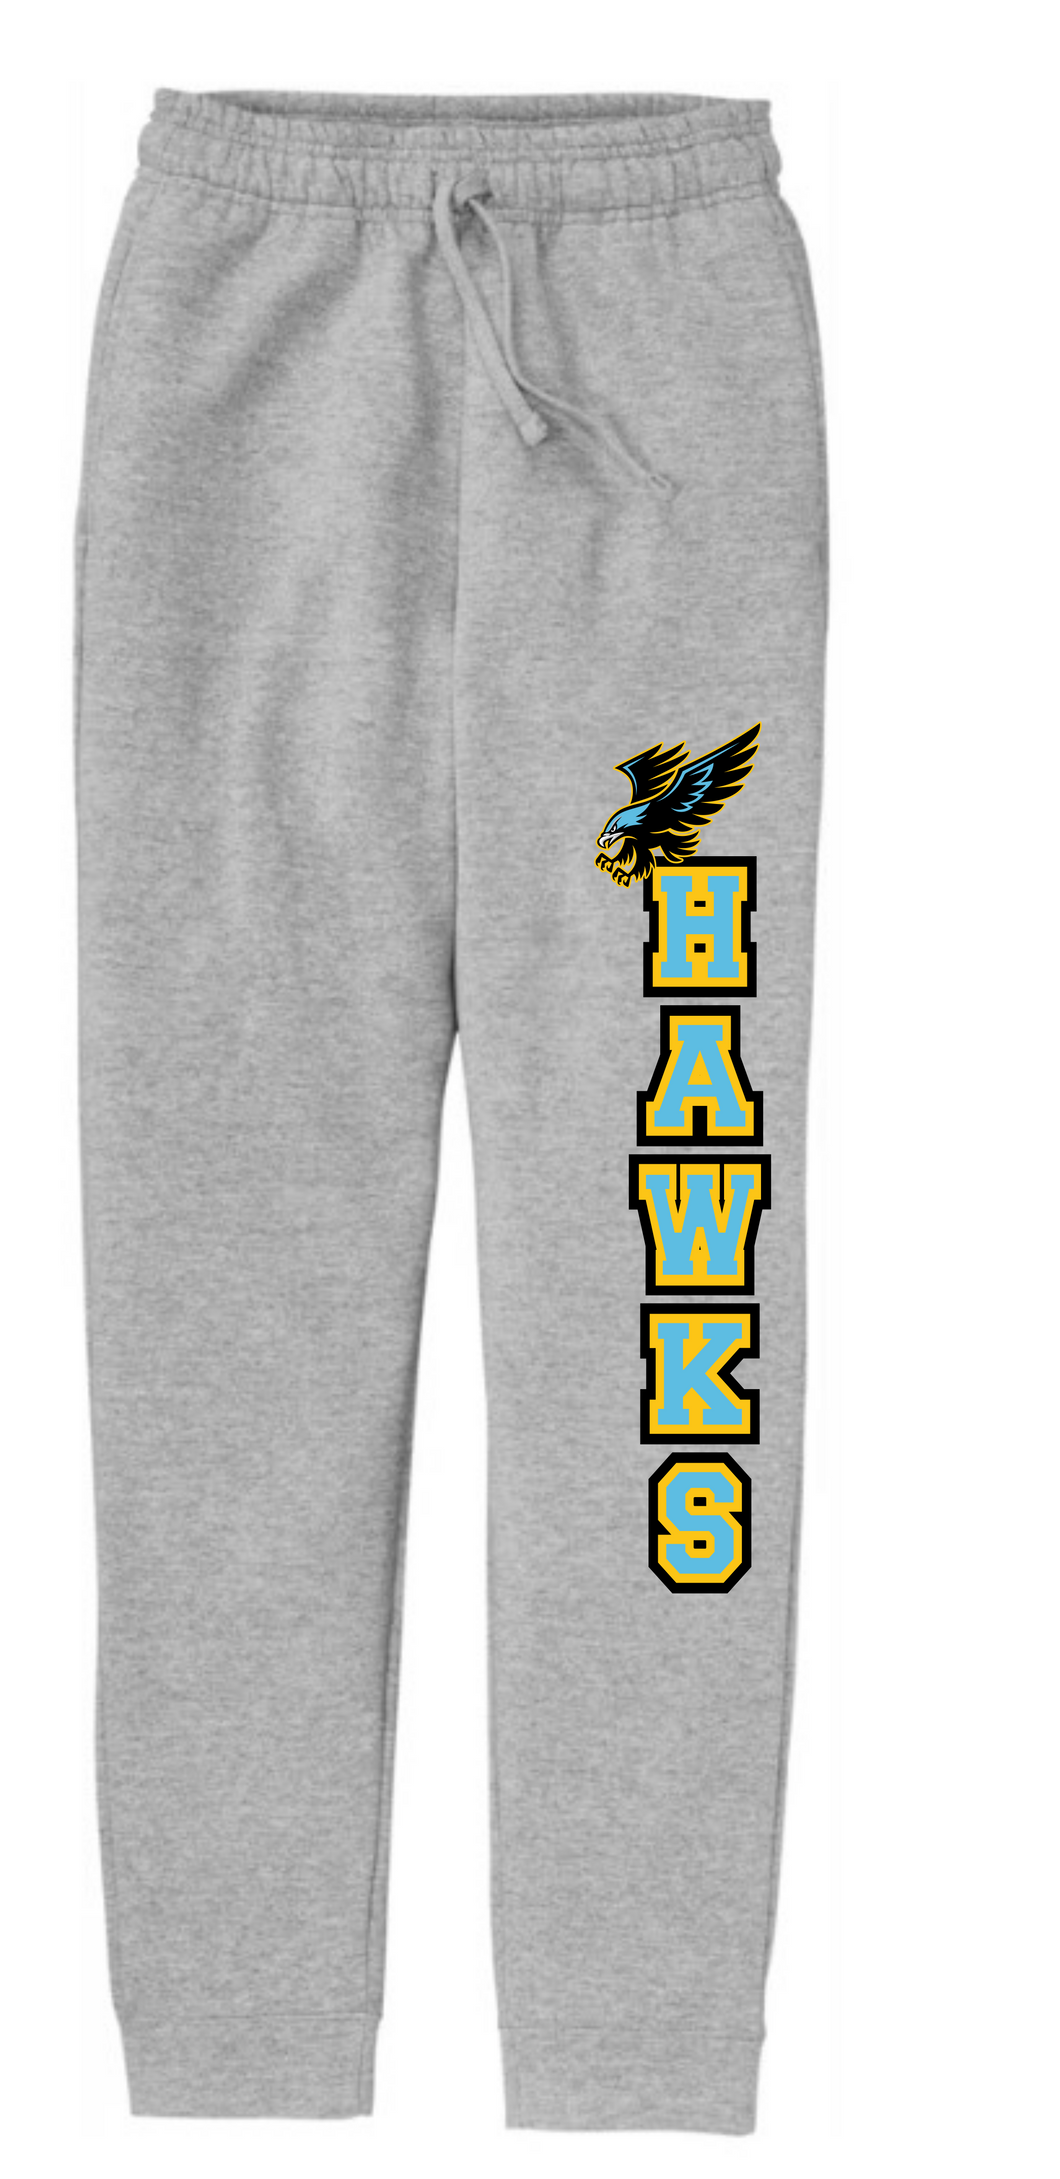 Hawks Sweatpant Joggers